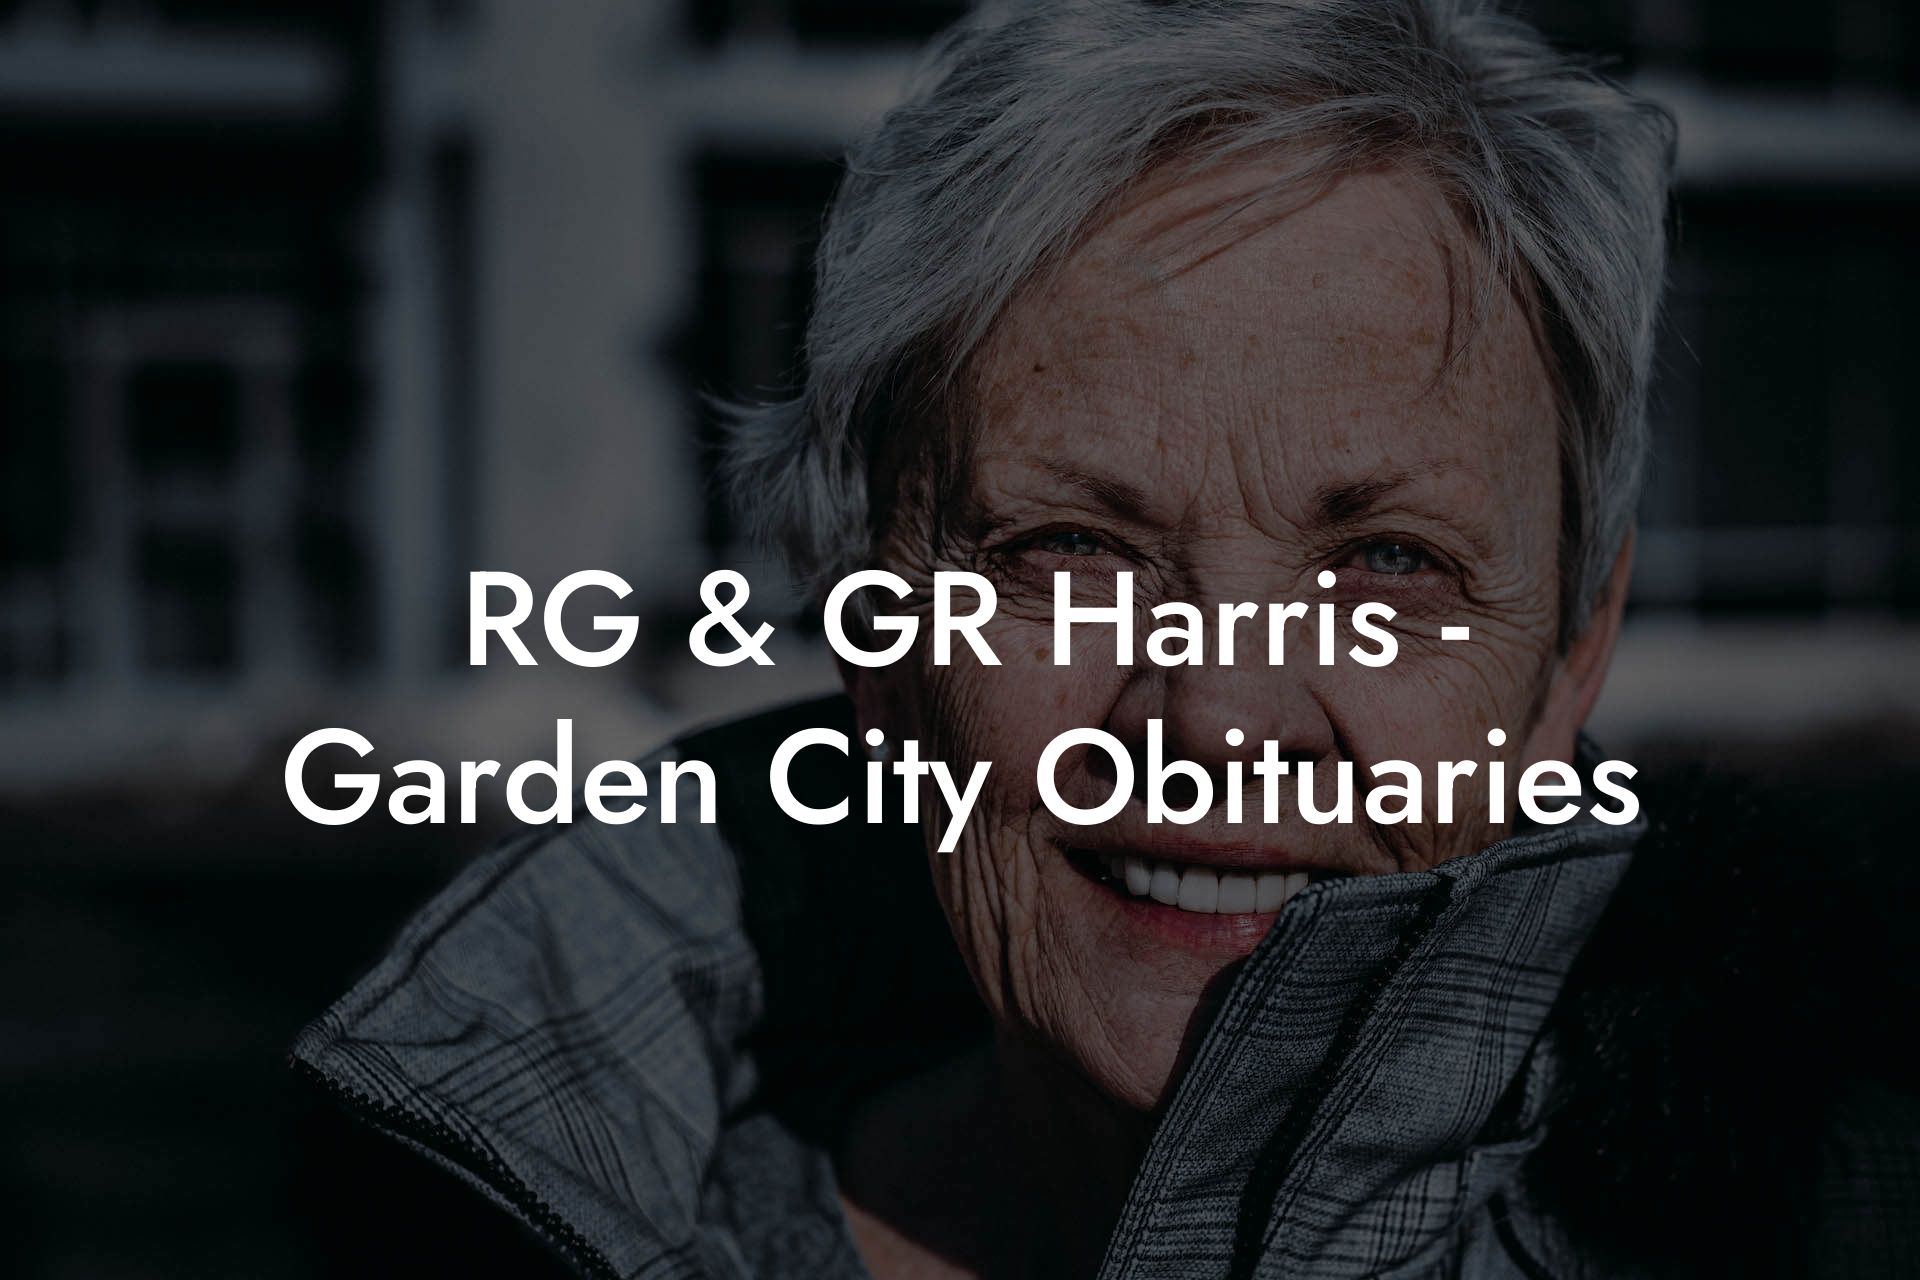 RG & GR Harris - Garden City Obituaries